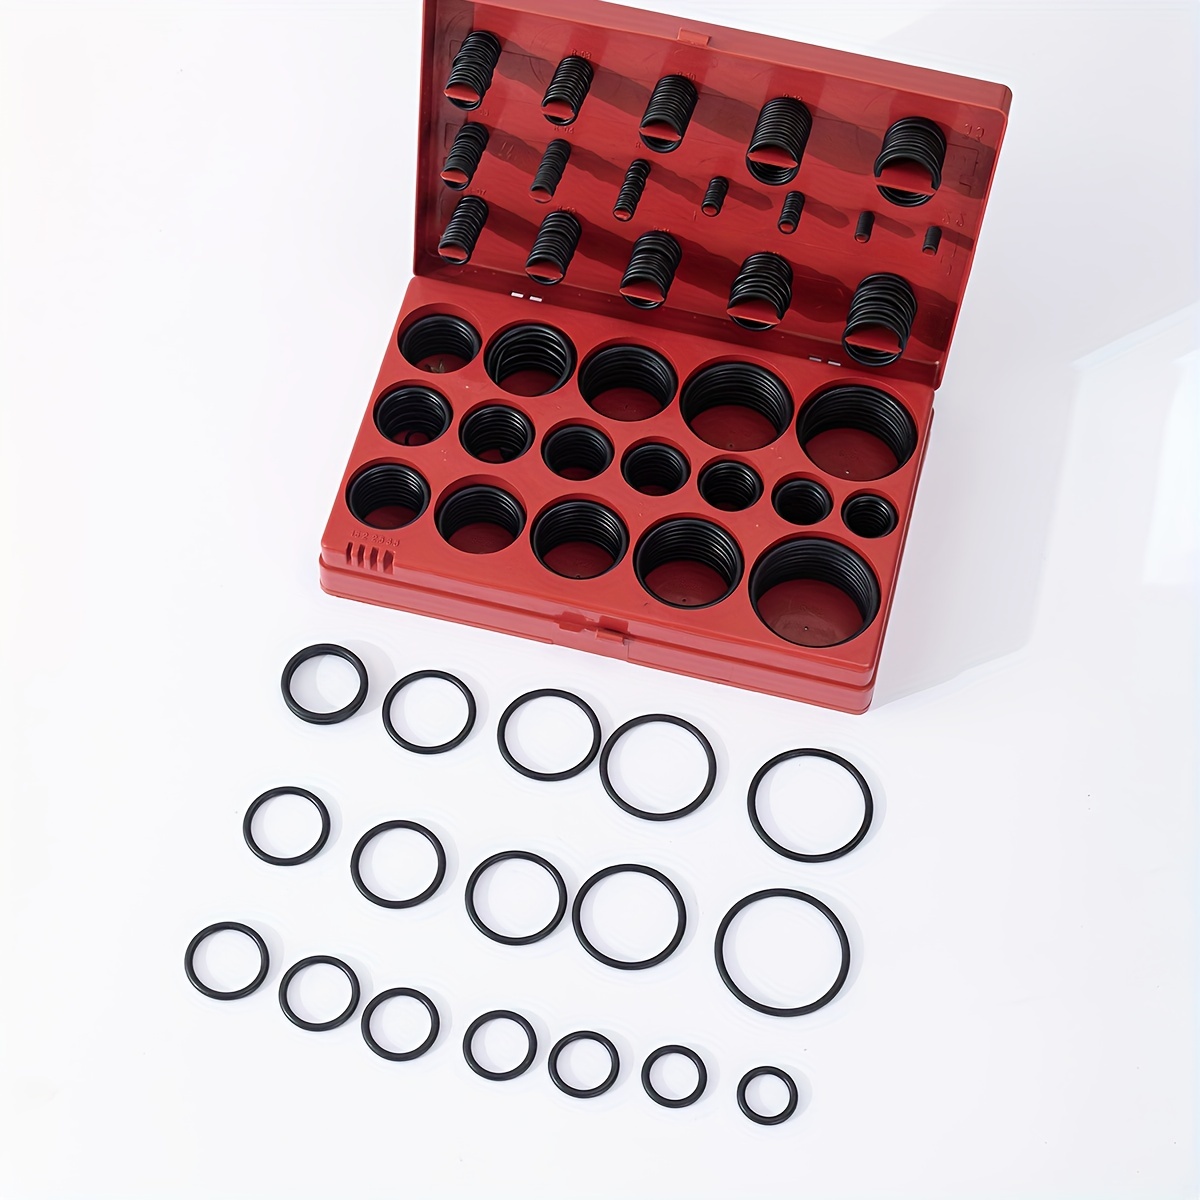 770pcs Rubber O Ring Assortment Kits 18 Sizes Sealing Gasket